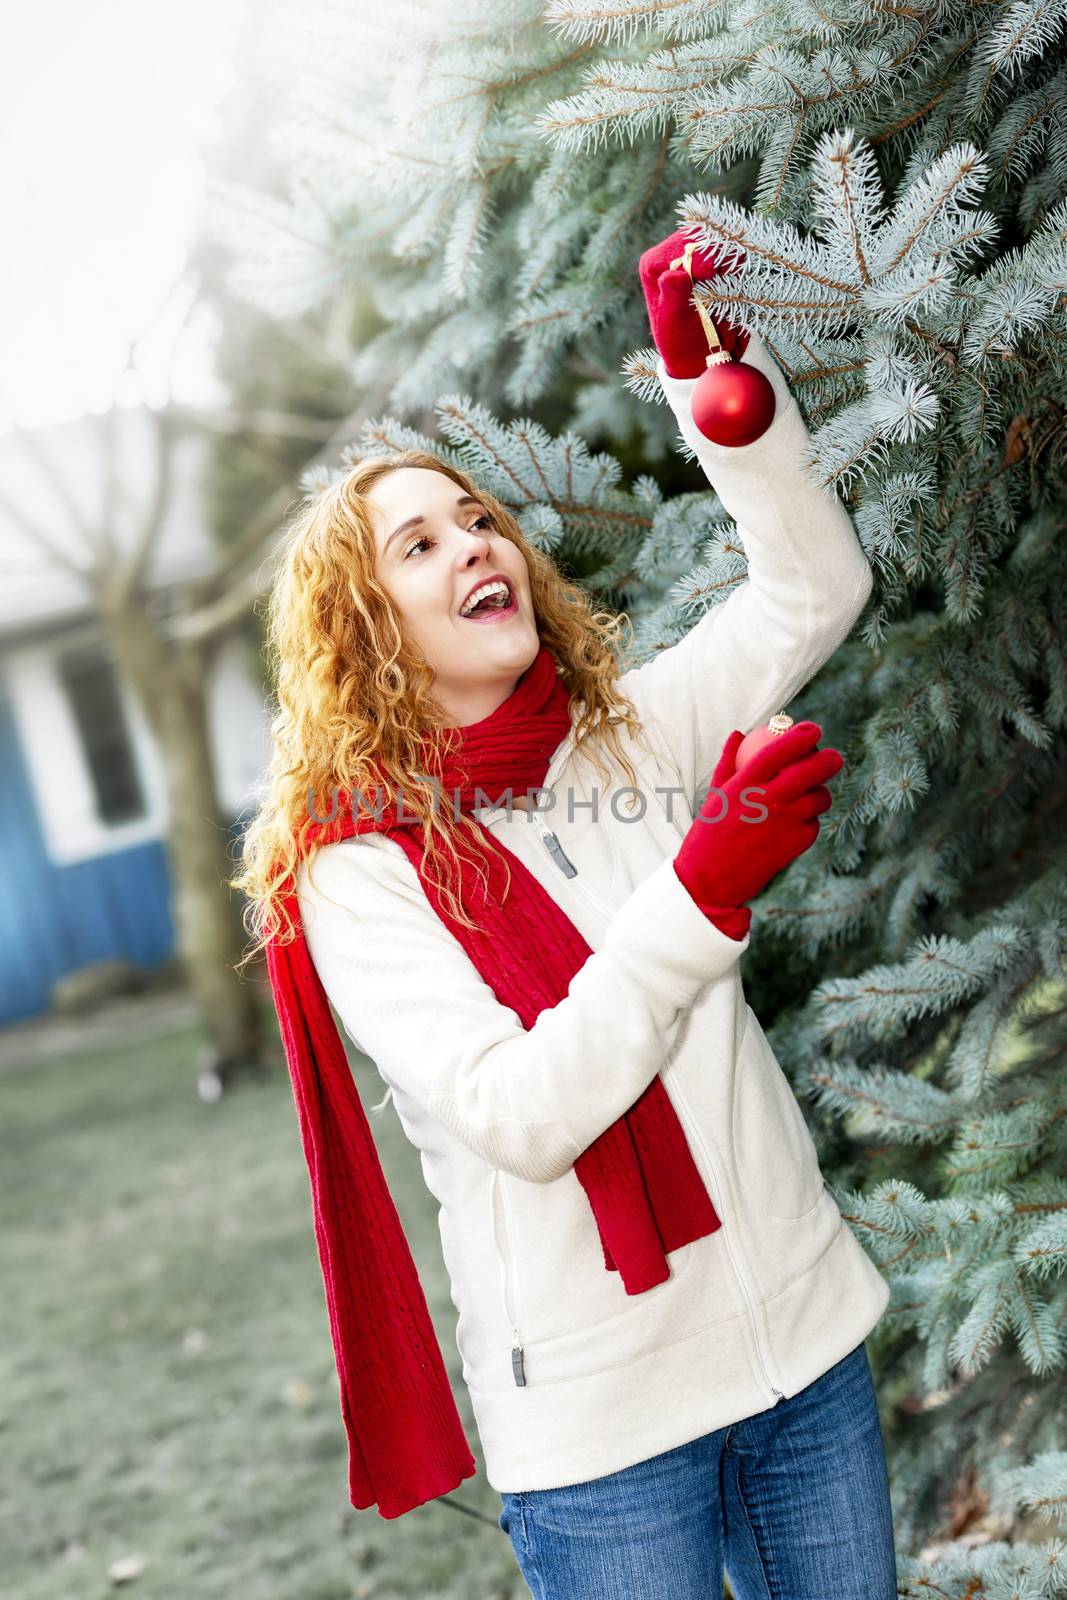 Joyful woman hanging Christmas ornaments on spruce tree outdoors in yard near home